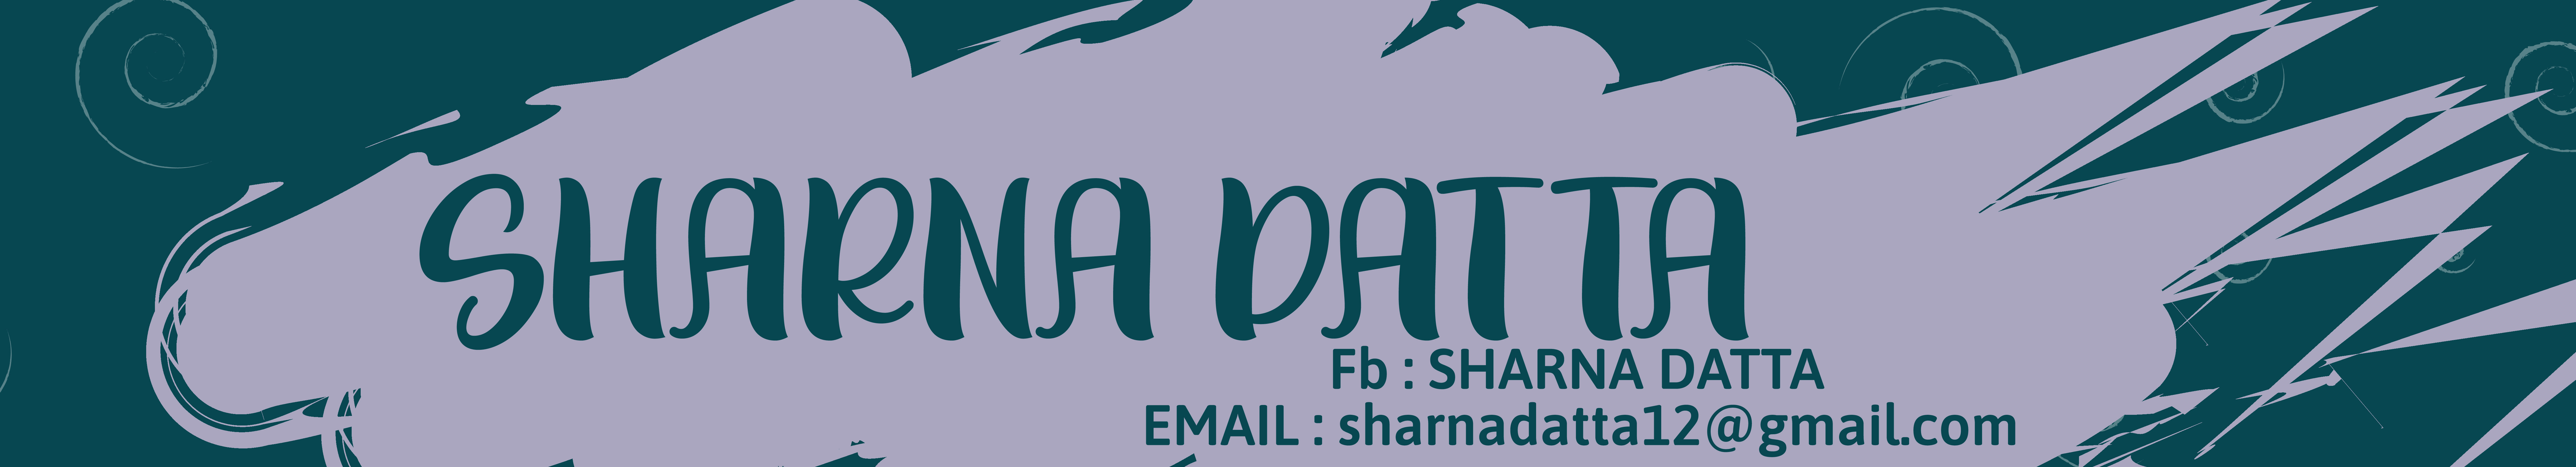 Sharna Datta's profile banner